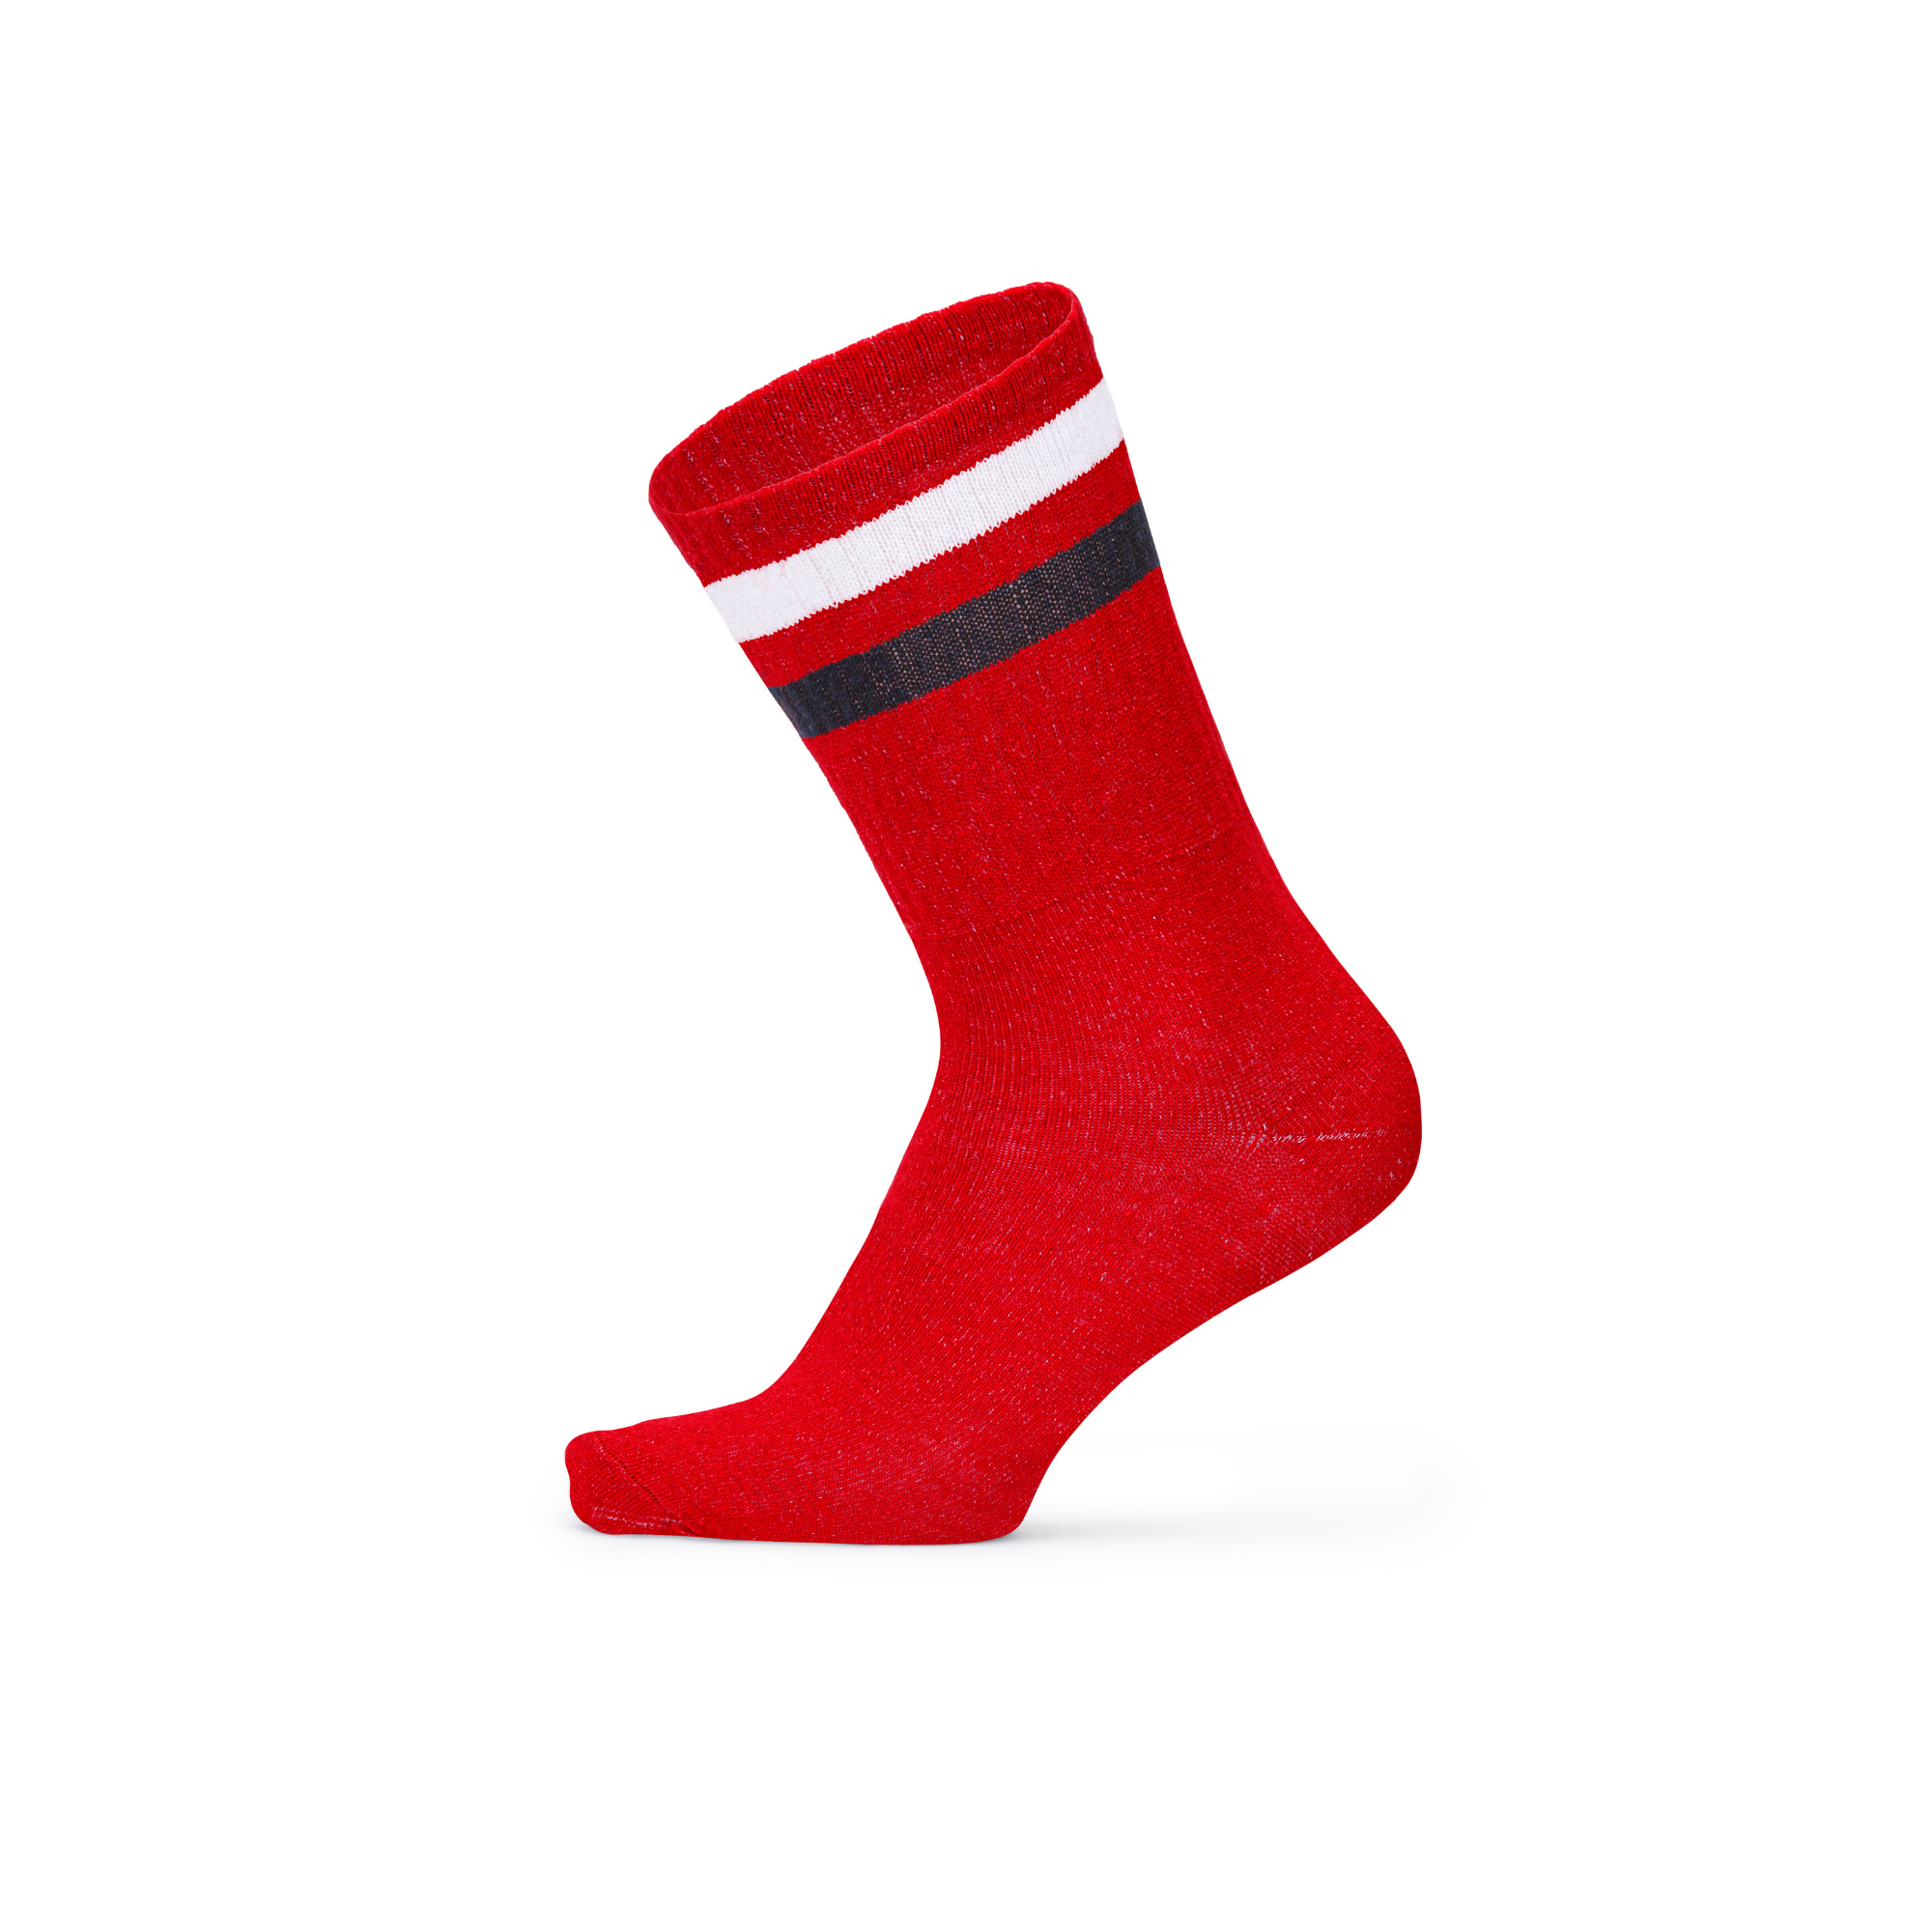 2 Stripe Red Colour Tennis Socks